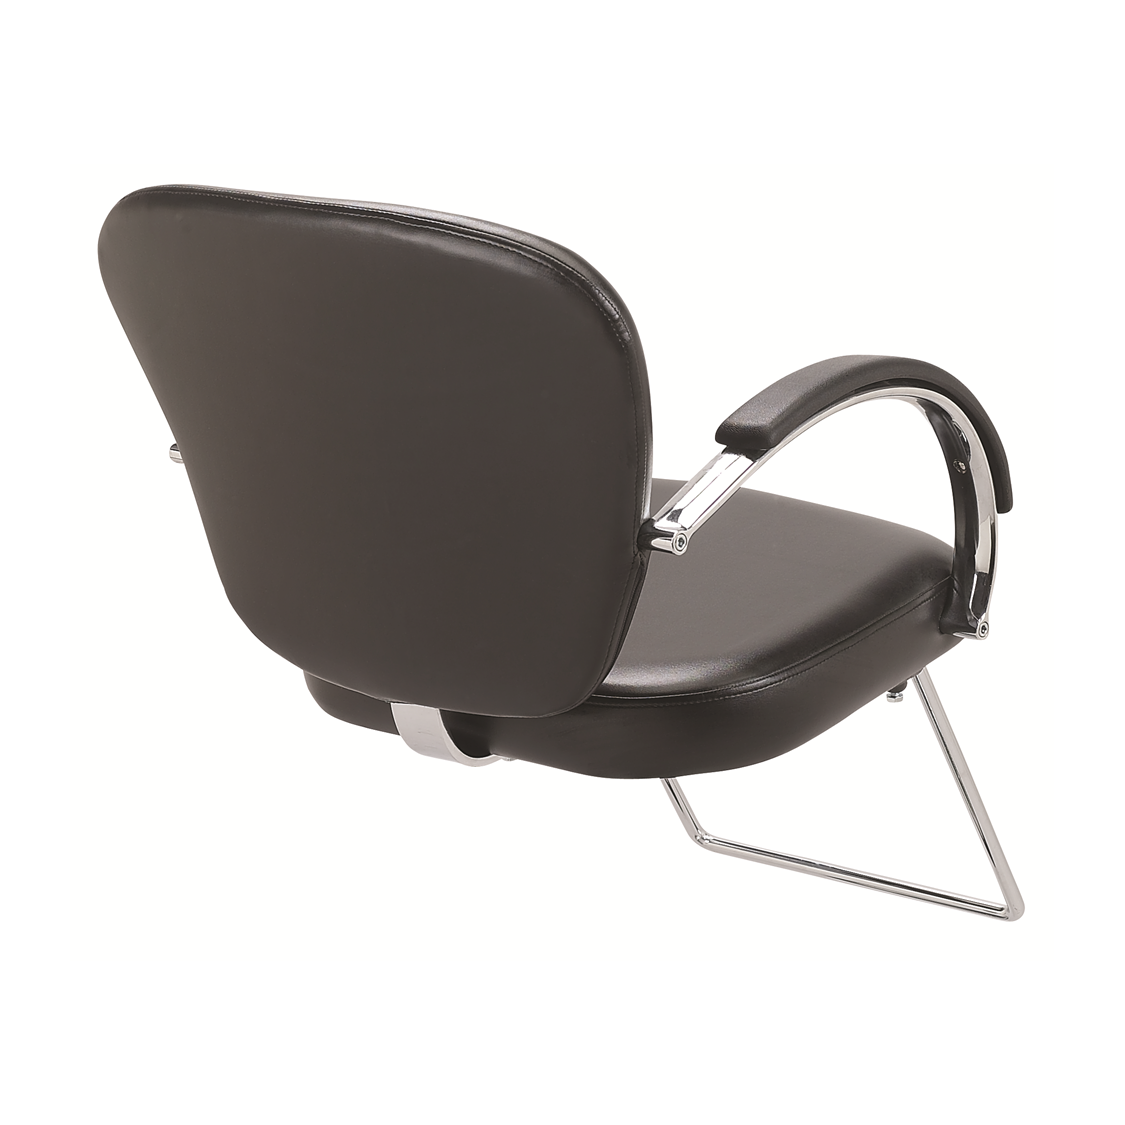 Madison Salon Styling Chair - Garfield Commercial Enterprises Salon Equipment Spa Furniture Barber Chair Luxury